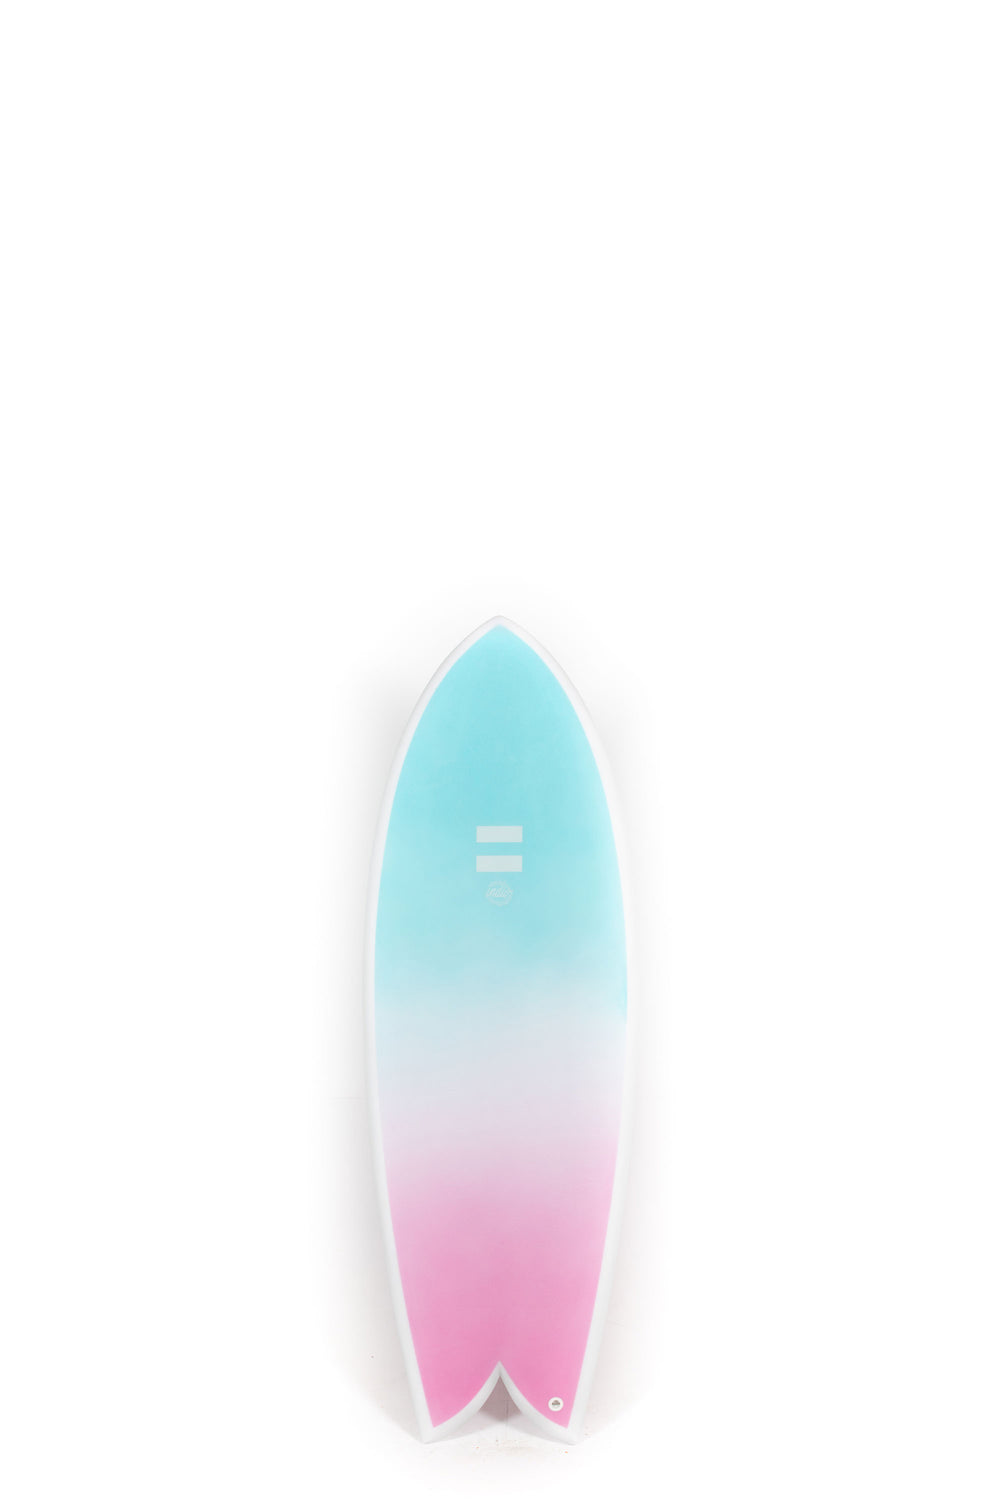 Pukas Surf Shop -  Indio Surfboard - DAB Space 2 - 5’5